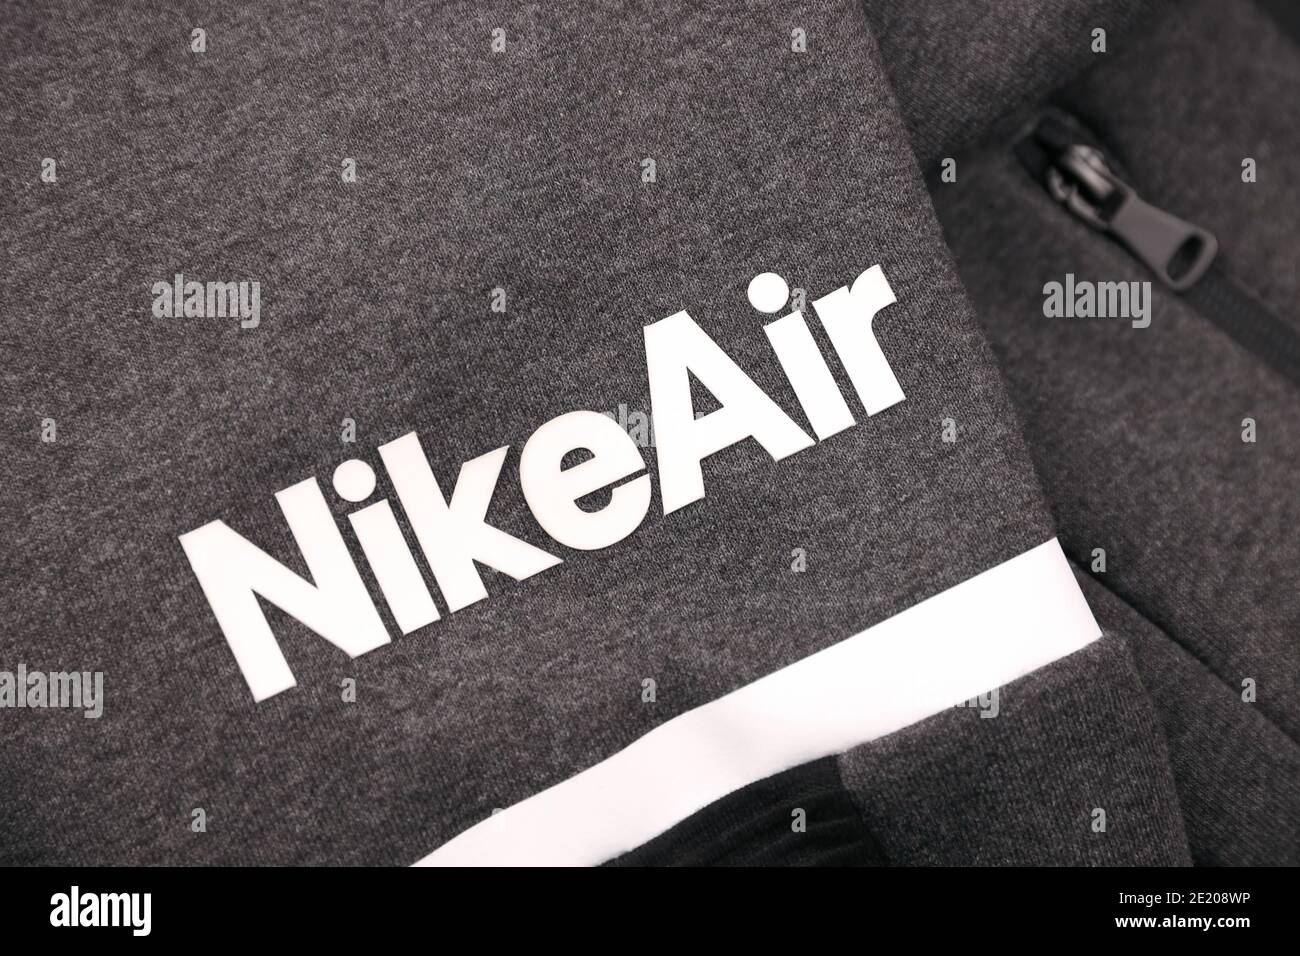 KHARKOV, UKRAINE - DECEMBER 20, 2020: Nike air logo on grey ...